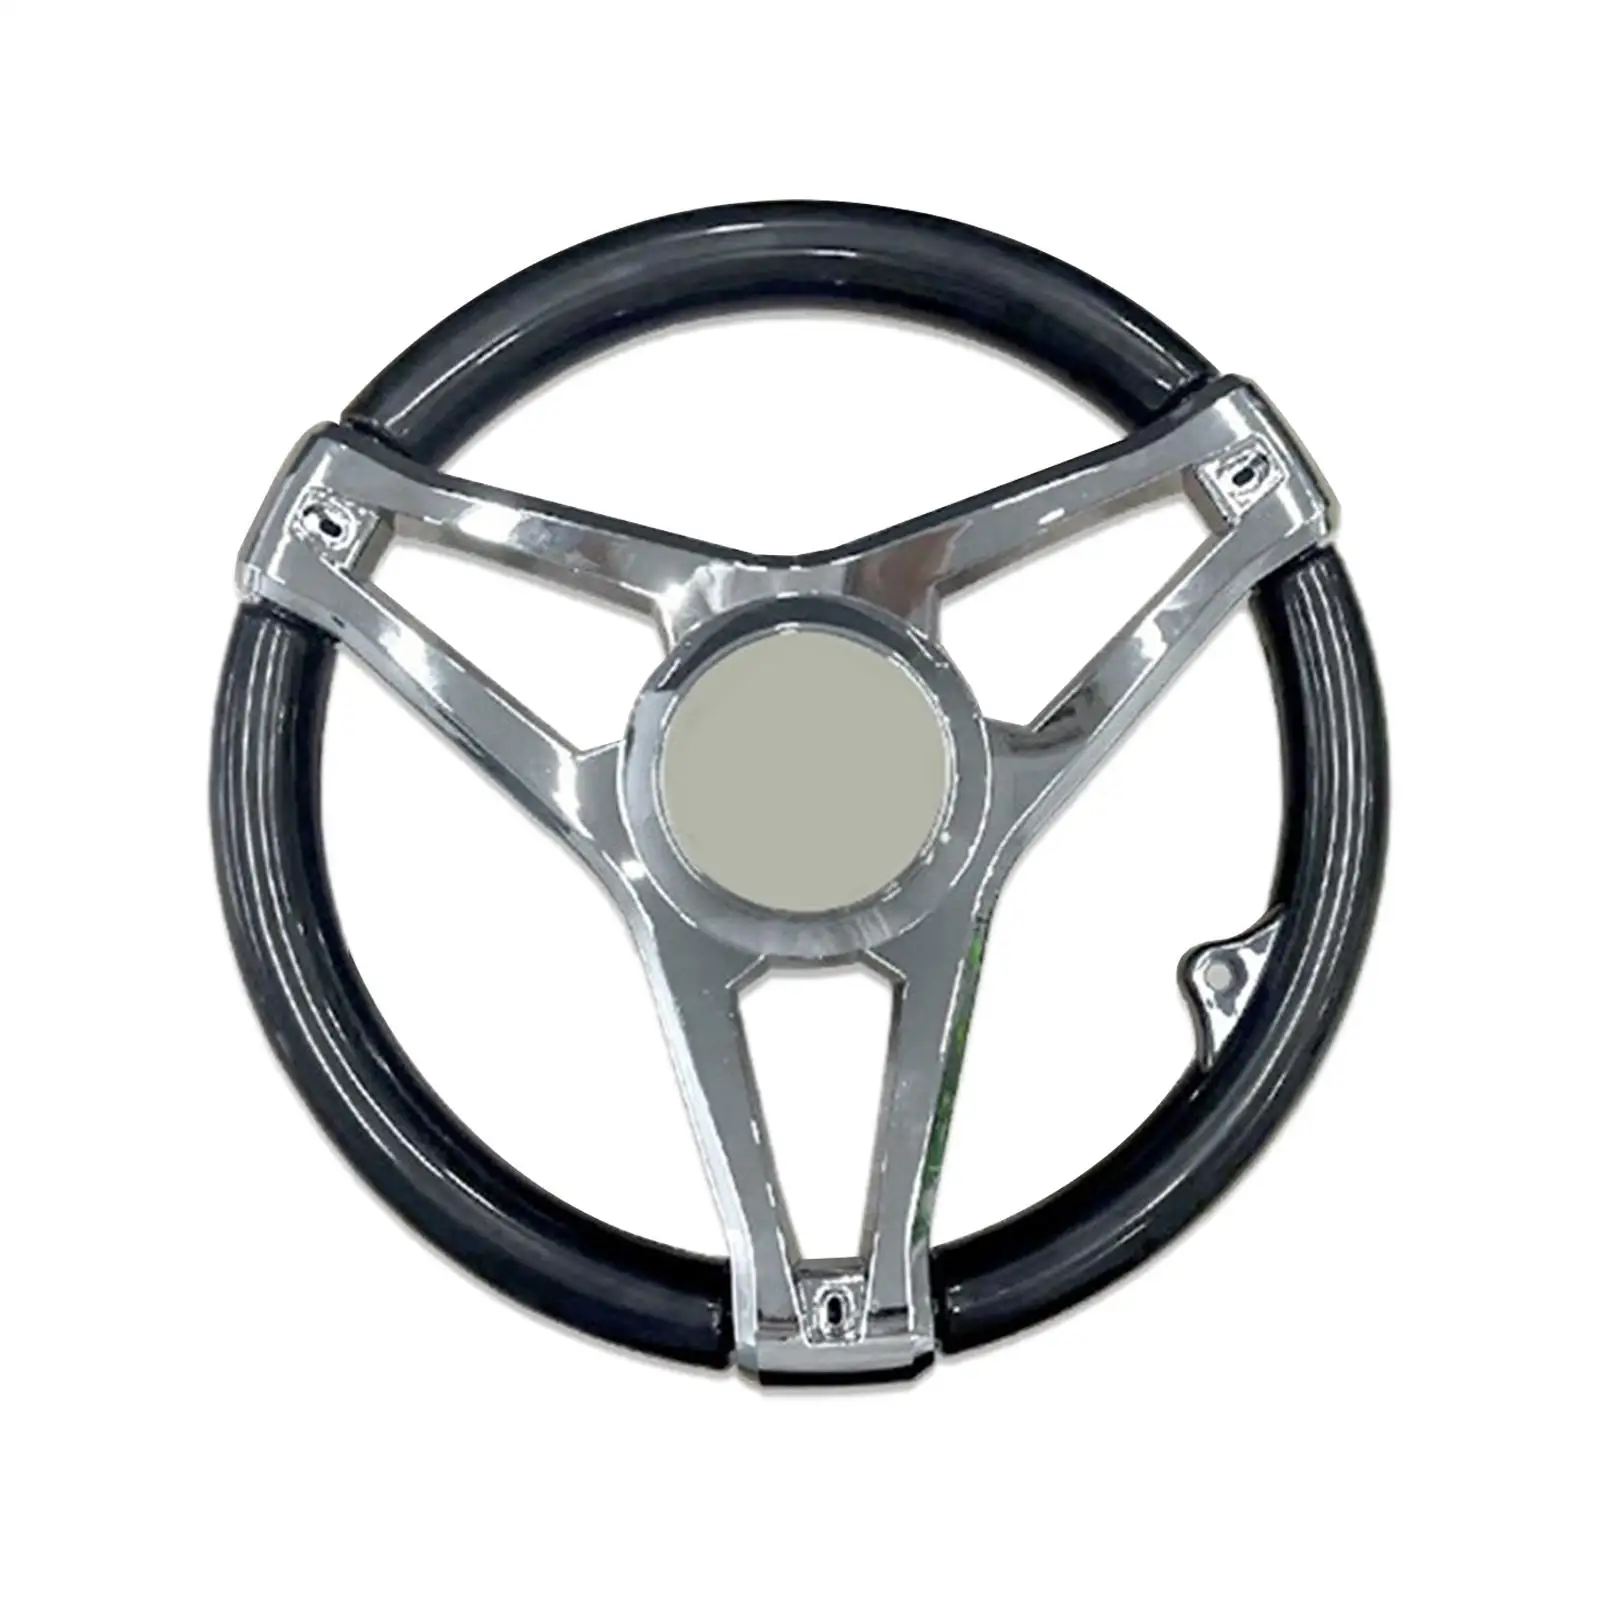 Universal Boat Steering Wheel, Accessories Weatherproof 3 Spoke Plastic for Speedboat Yacht Marine Vessels